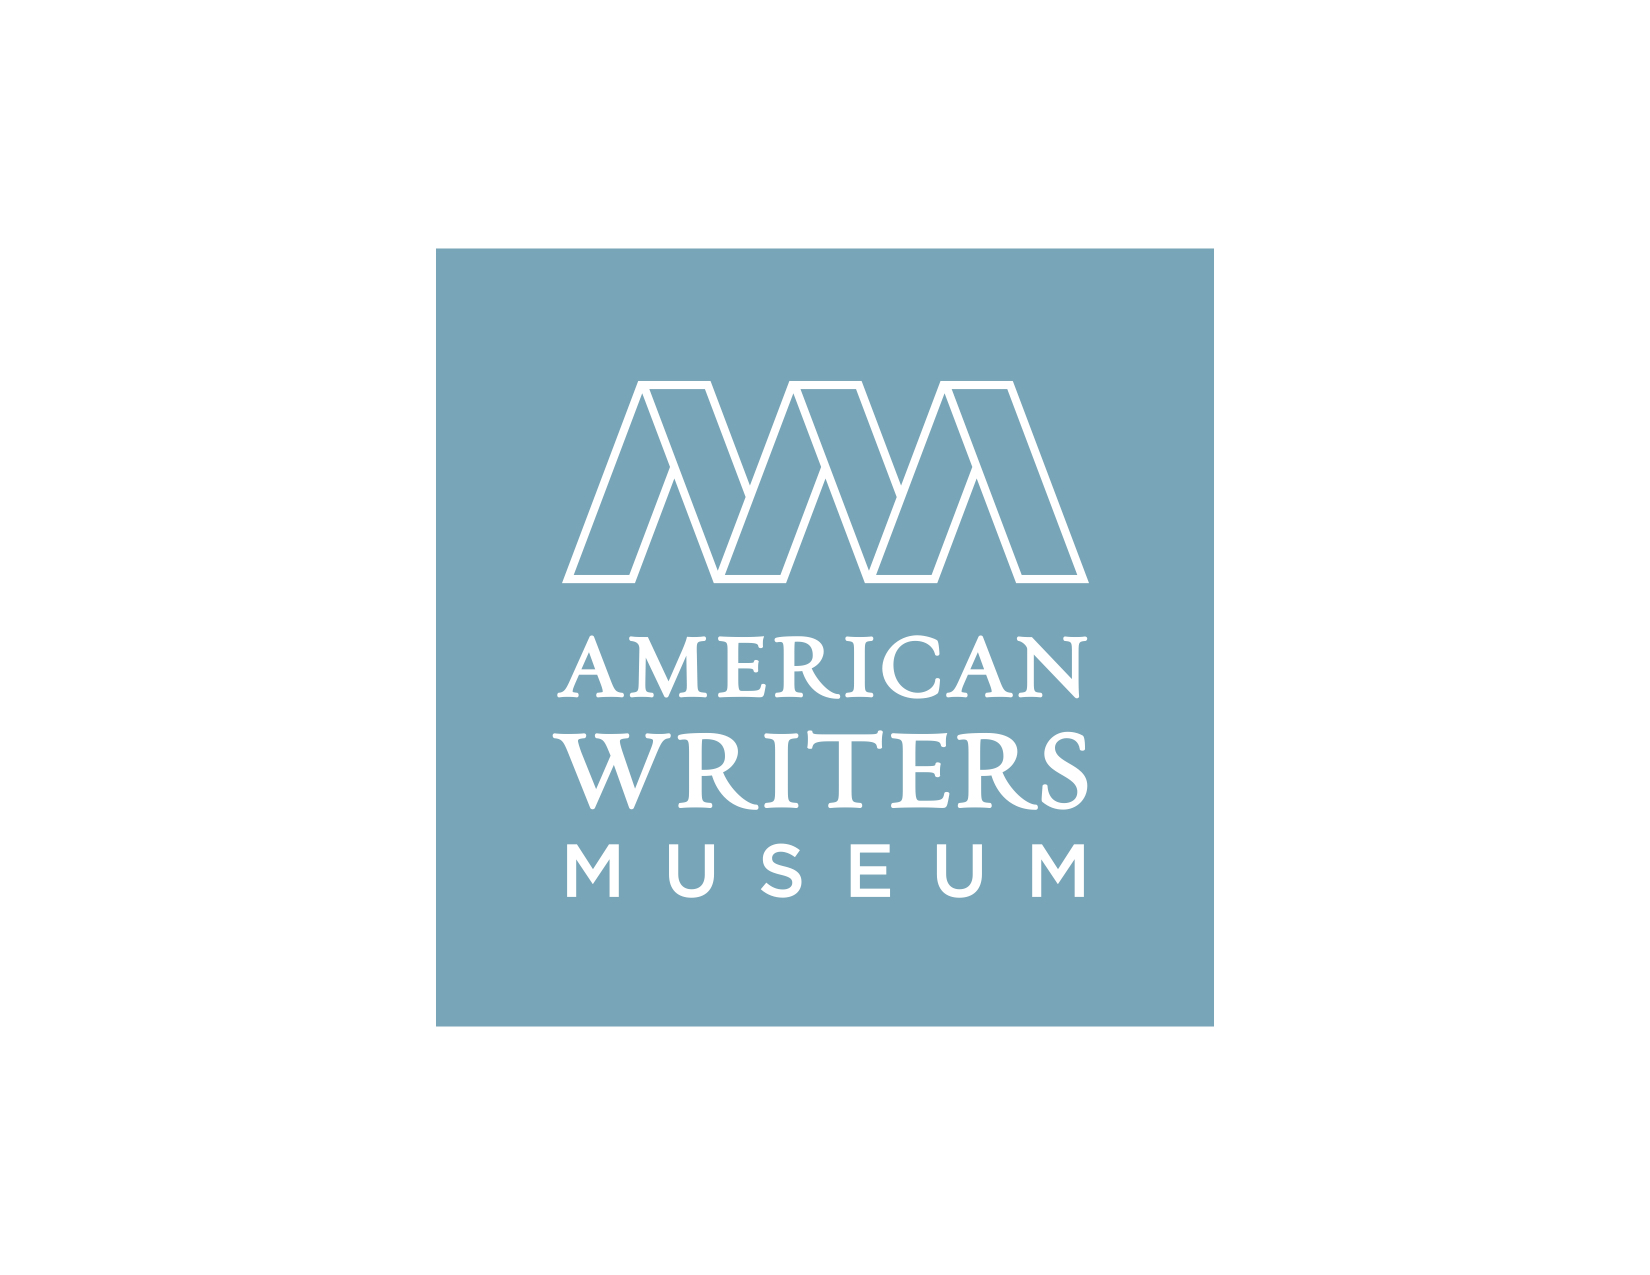 American writers museum logo